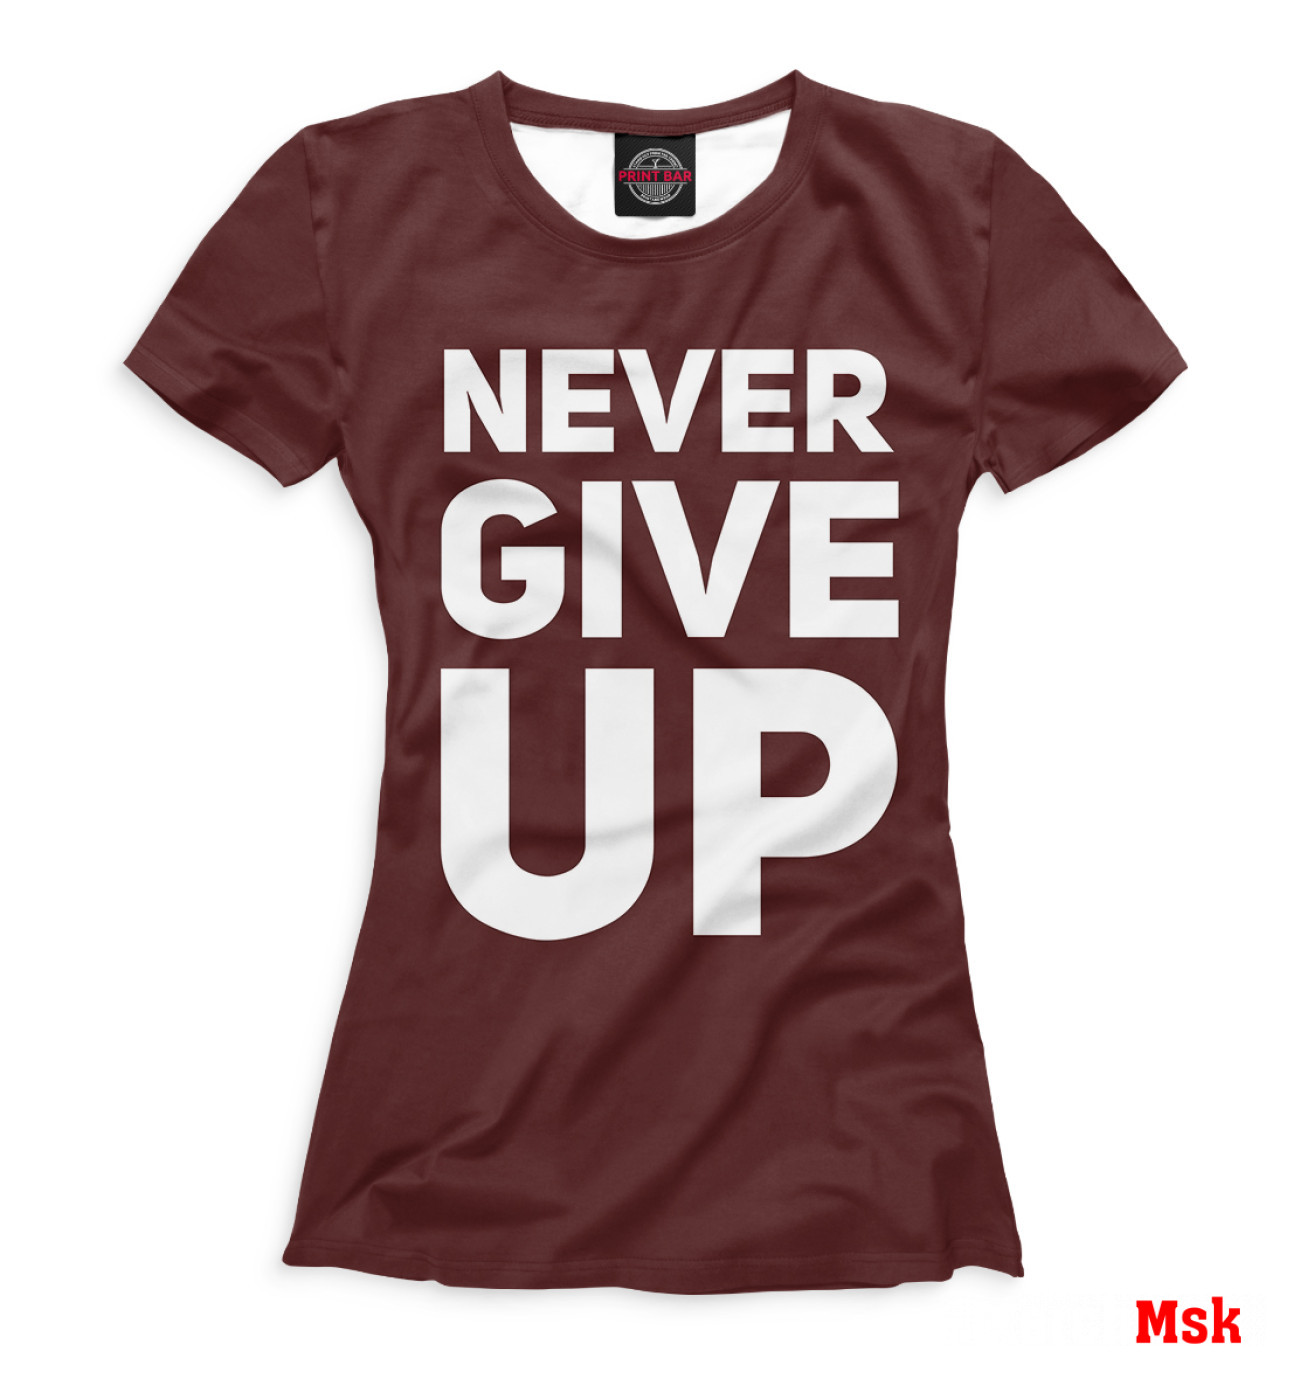 Женская Футболка Never Give Up, артикул: FTO-335398-fut-1